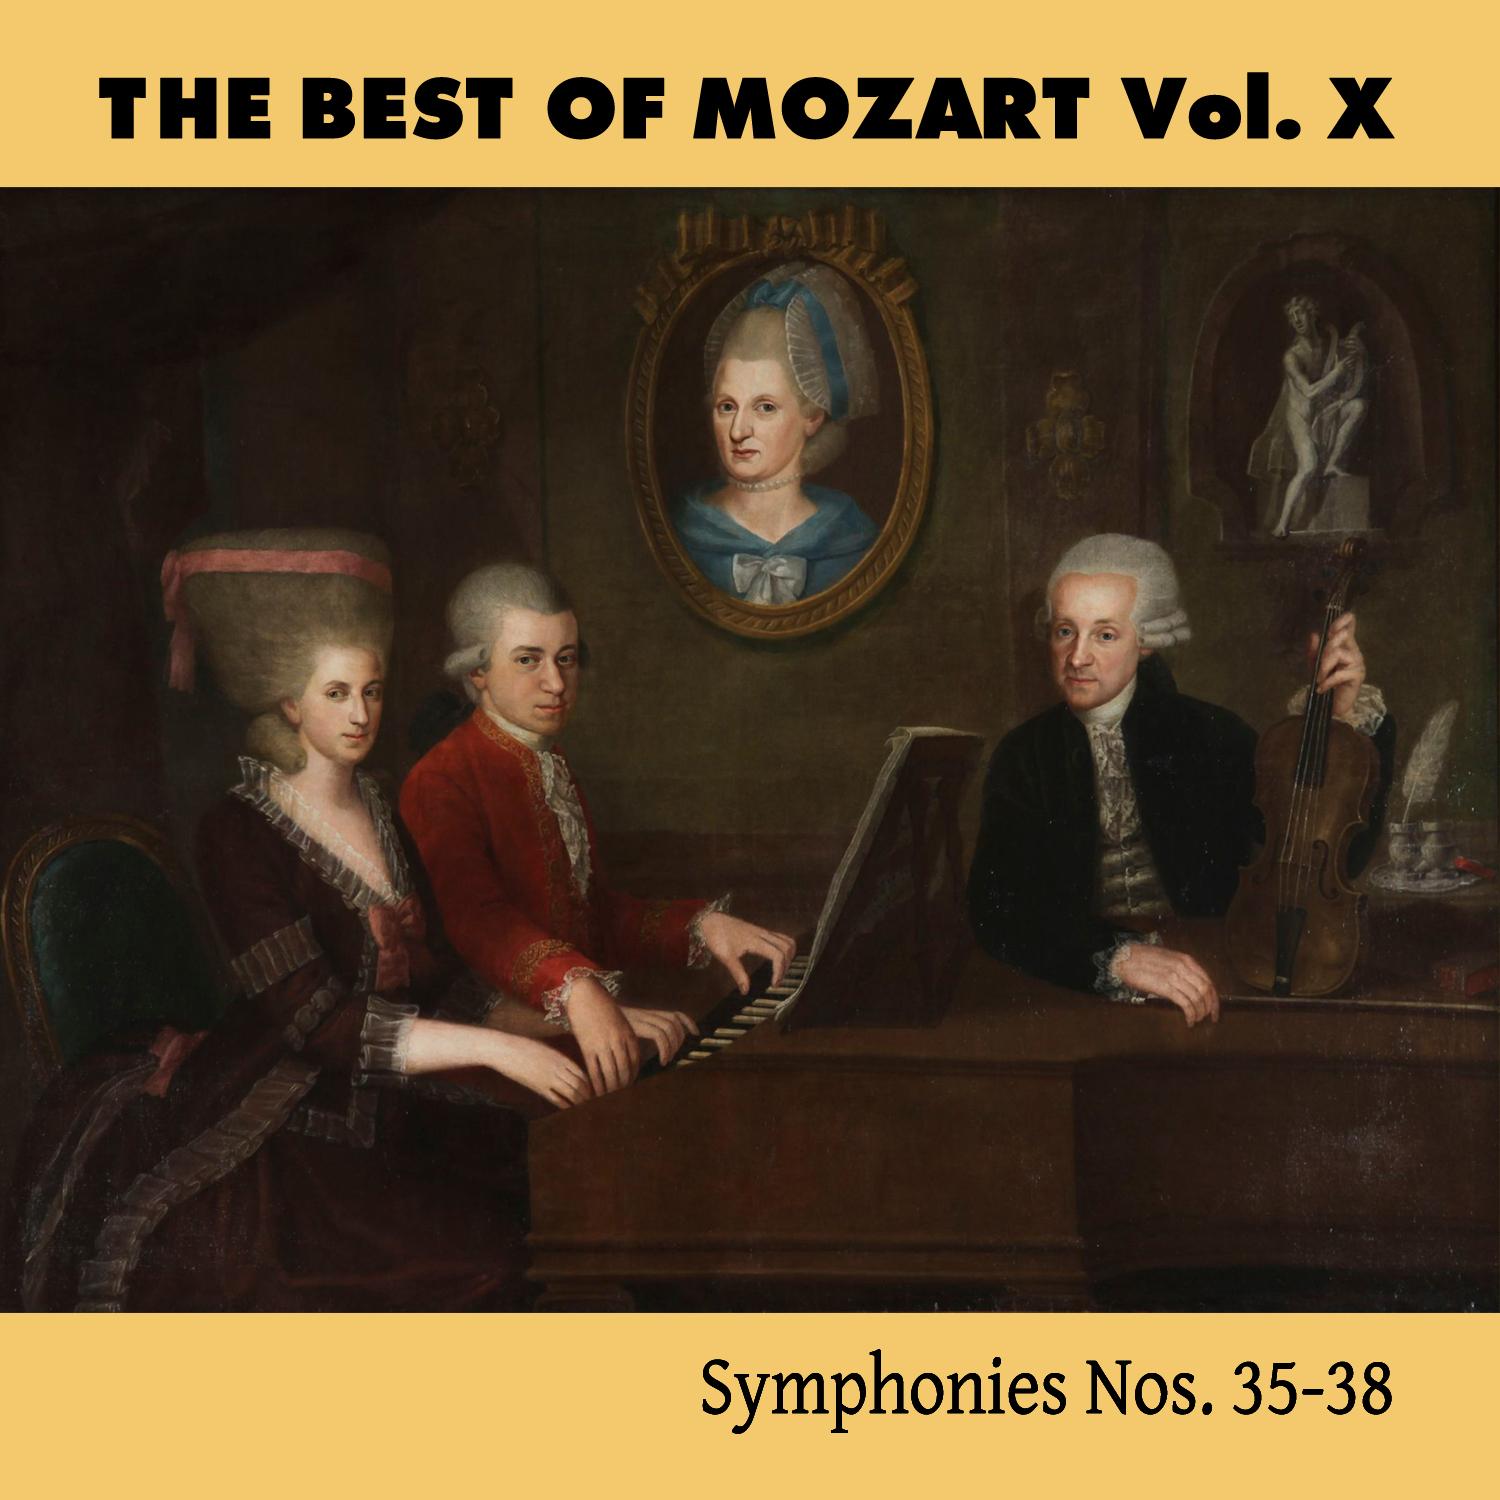 The Best of Mozart Vol. X, Symphonies Nos. 35-38